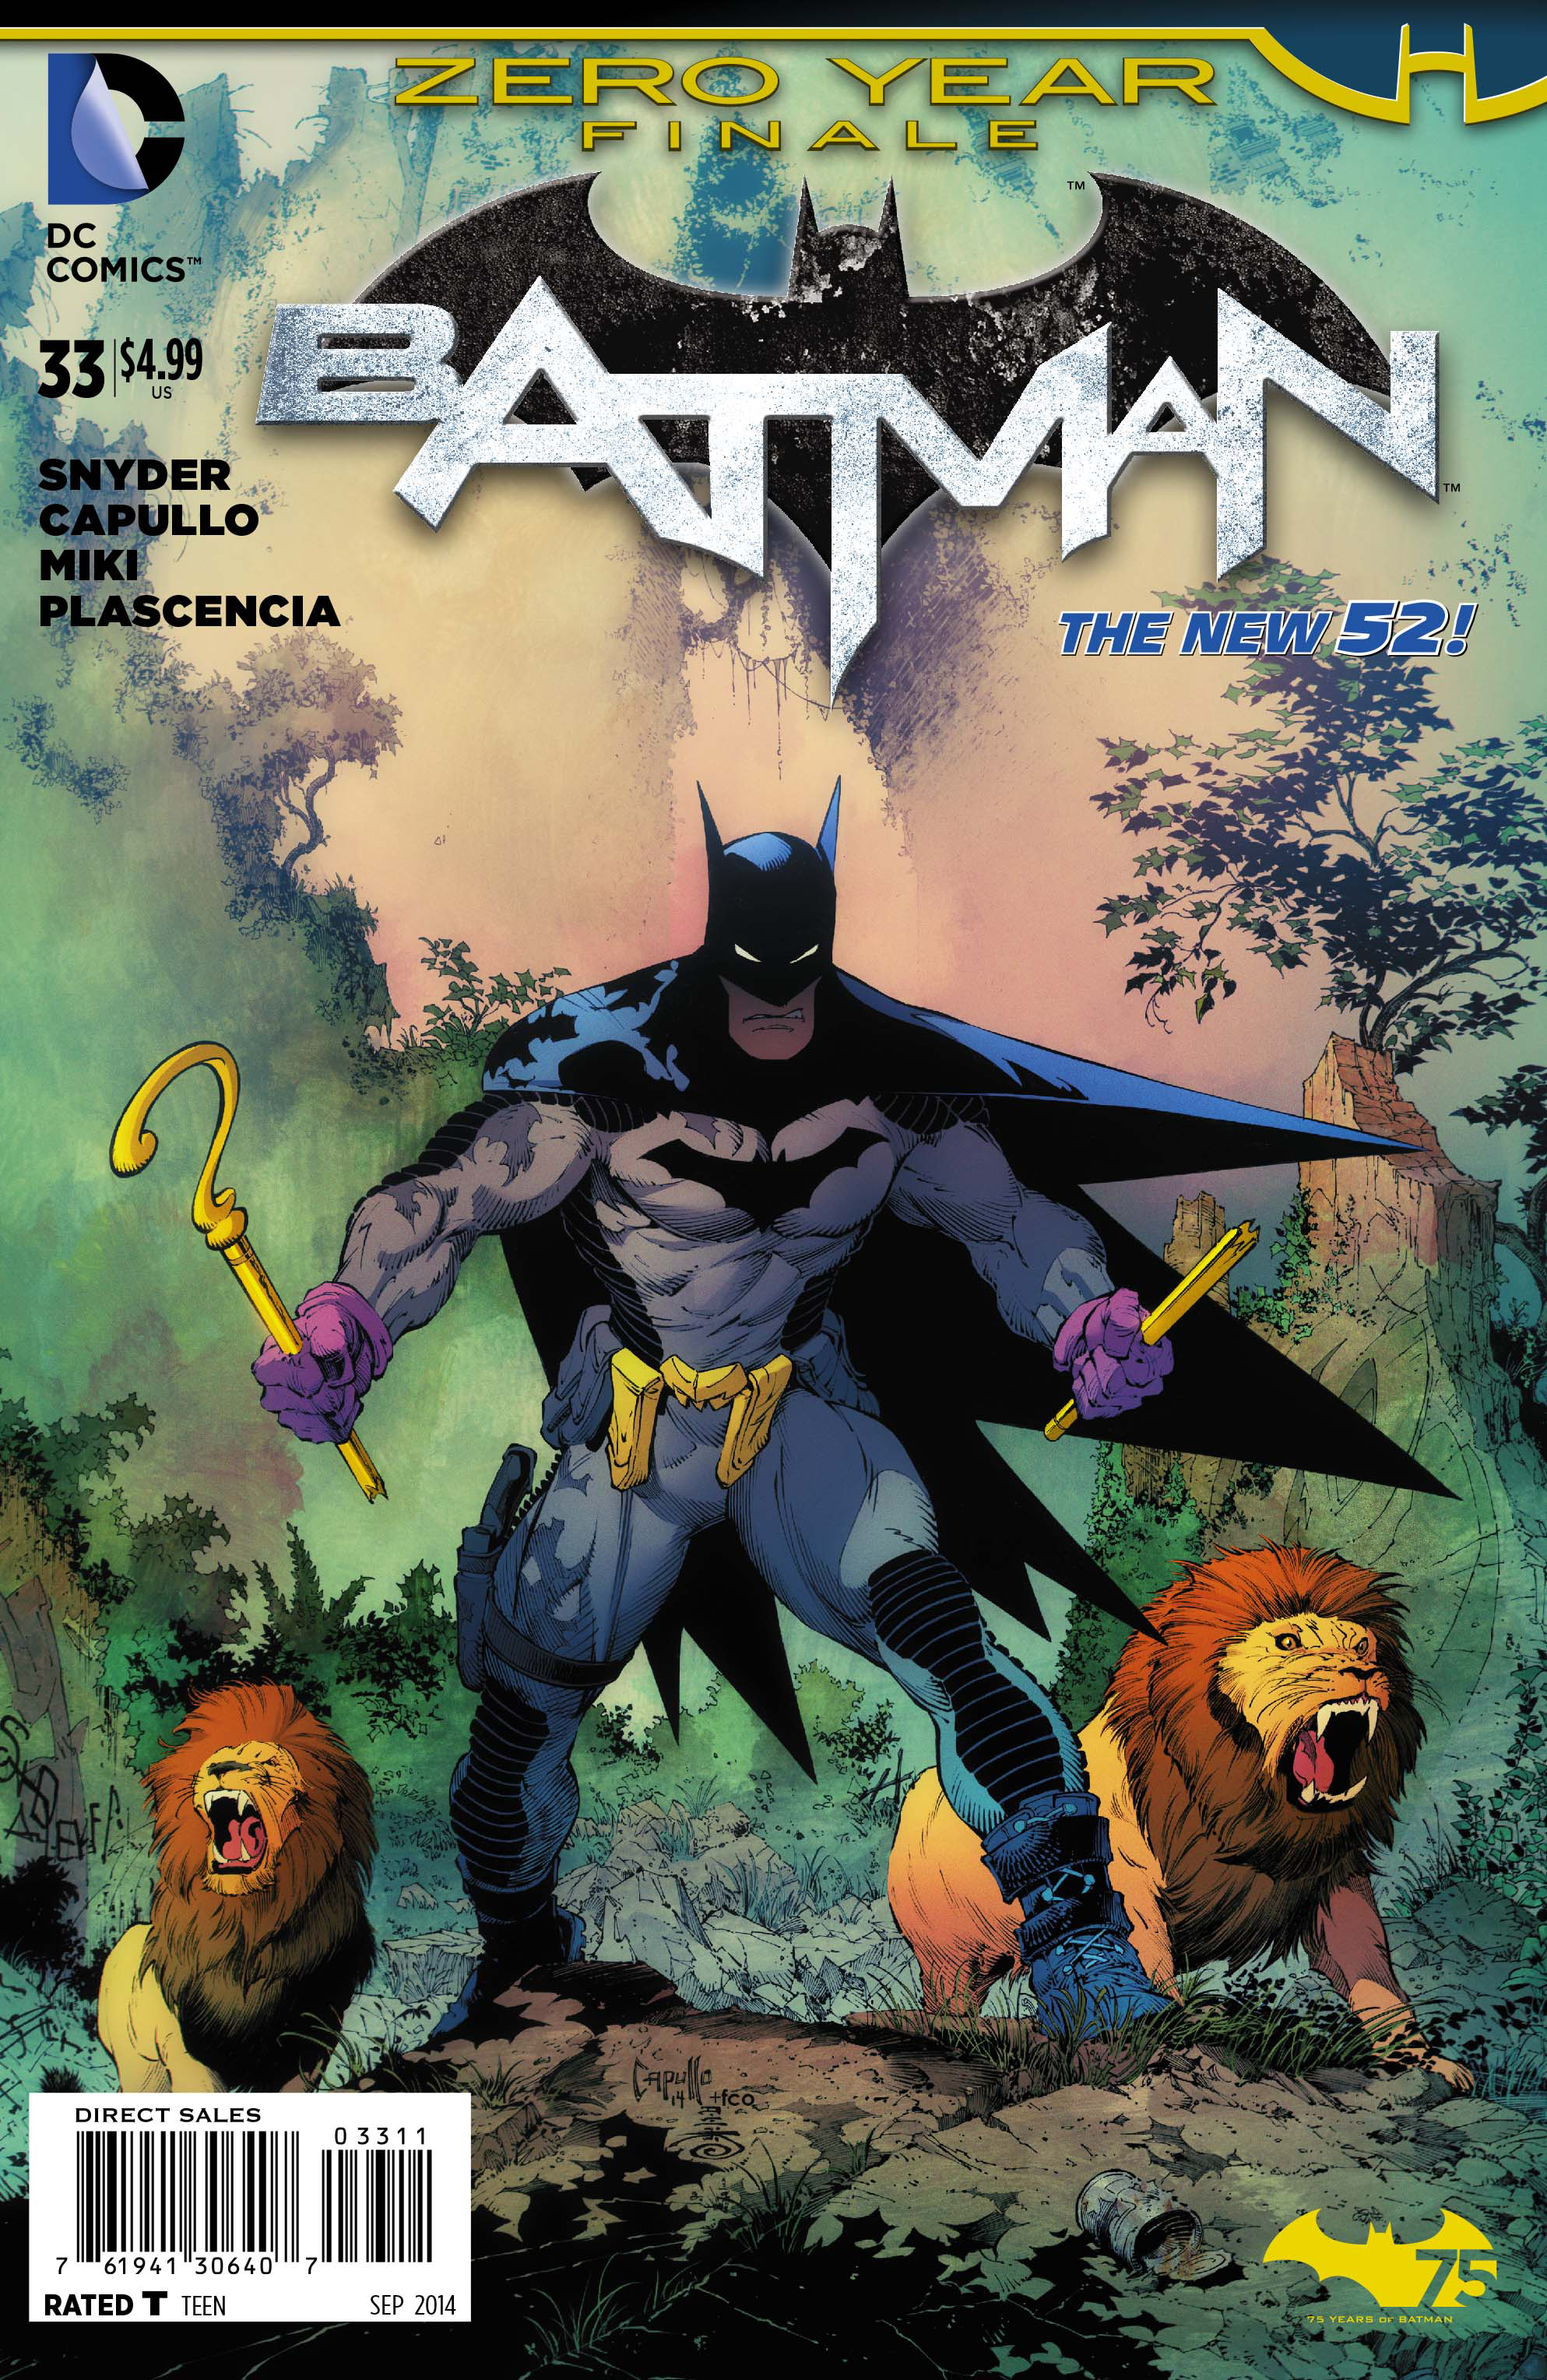 BATMAN #33 (ZERO YEAR) (NOTE PRICE)